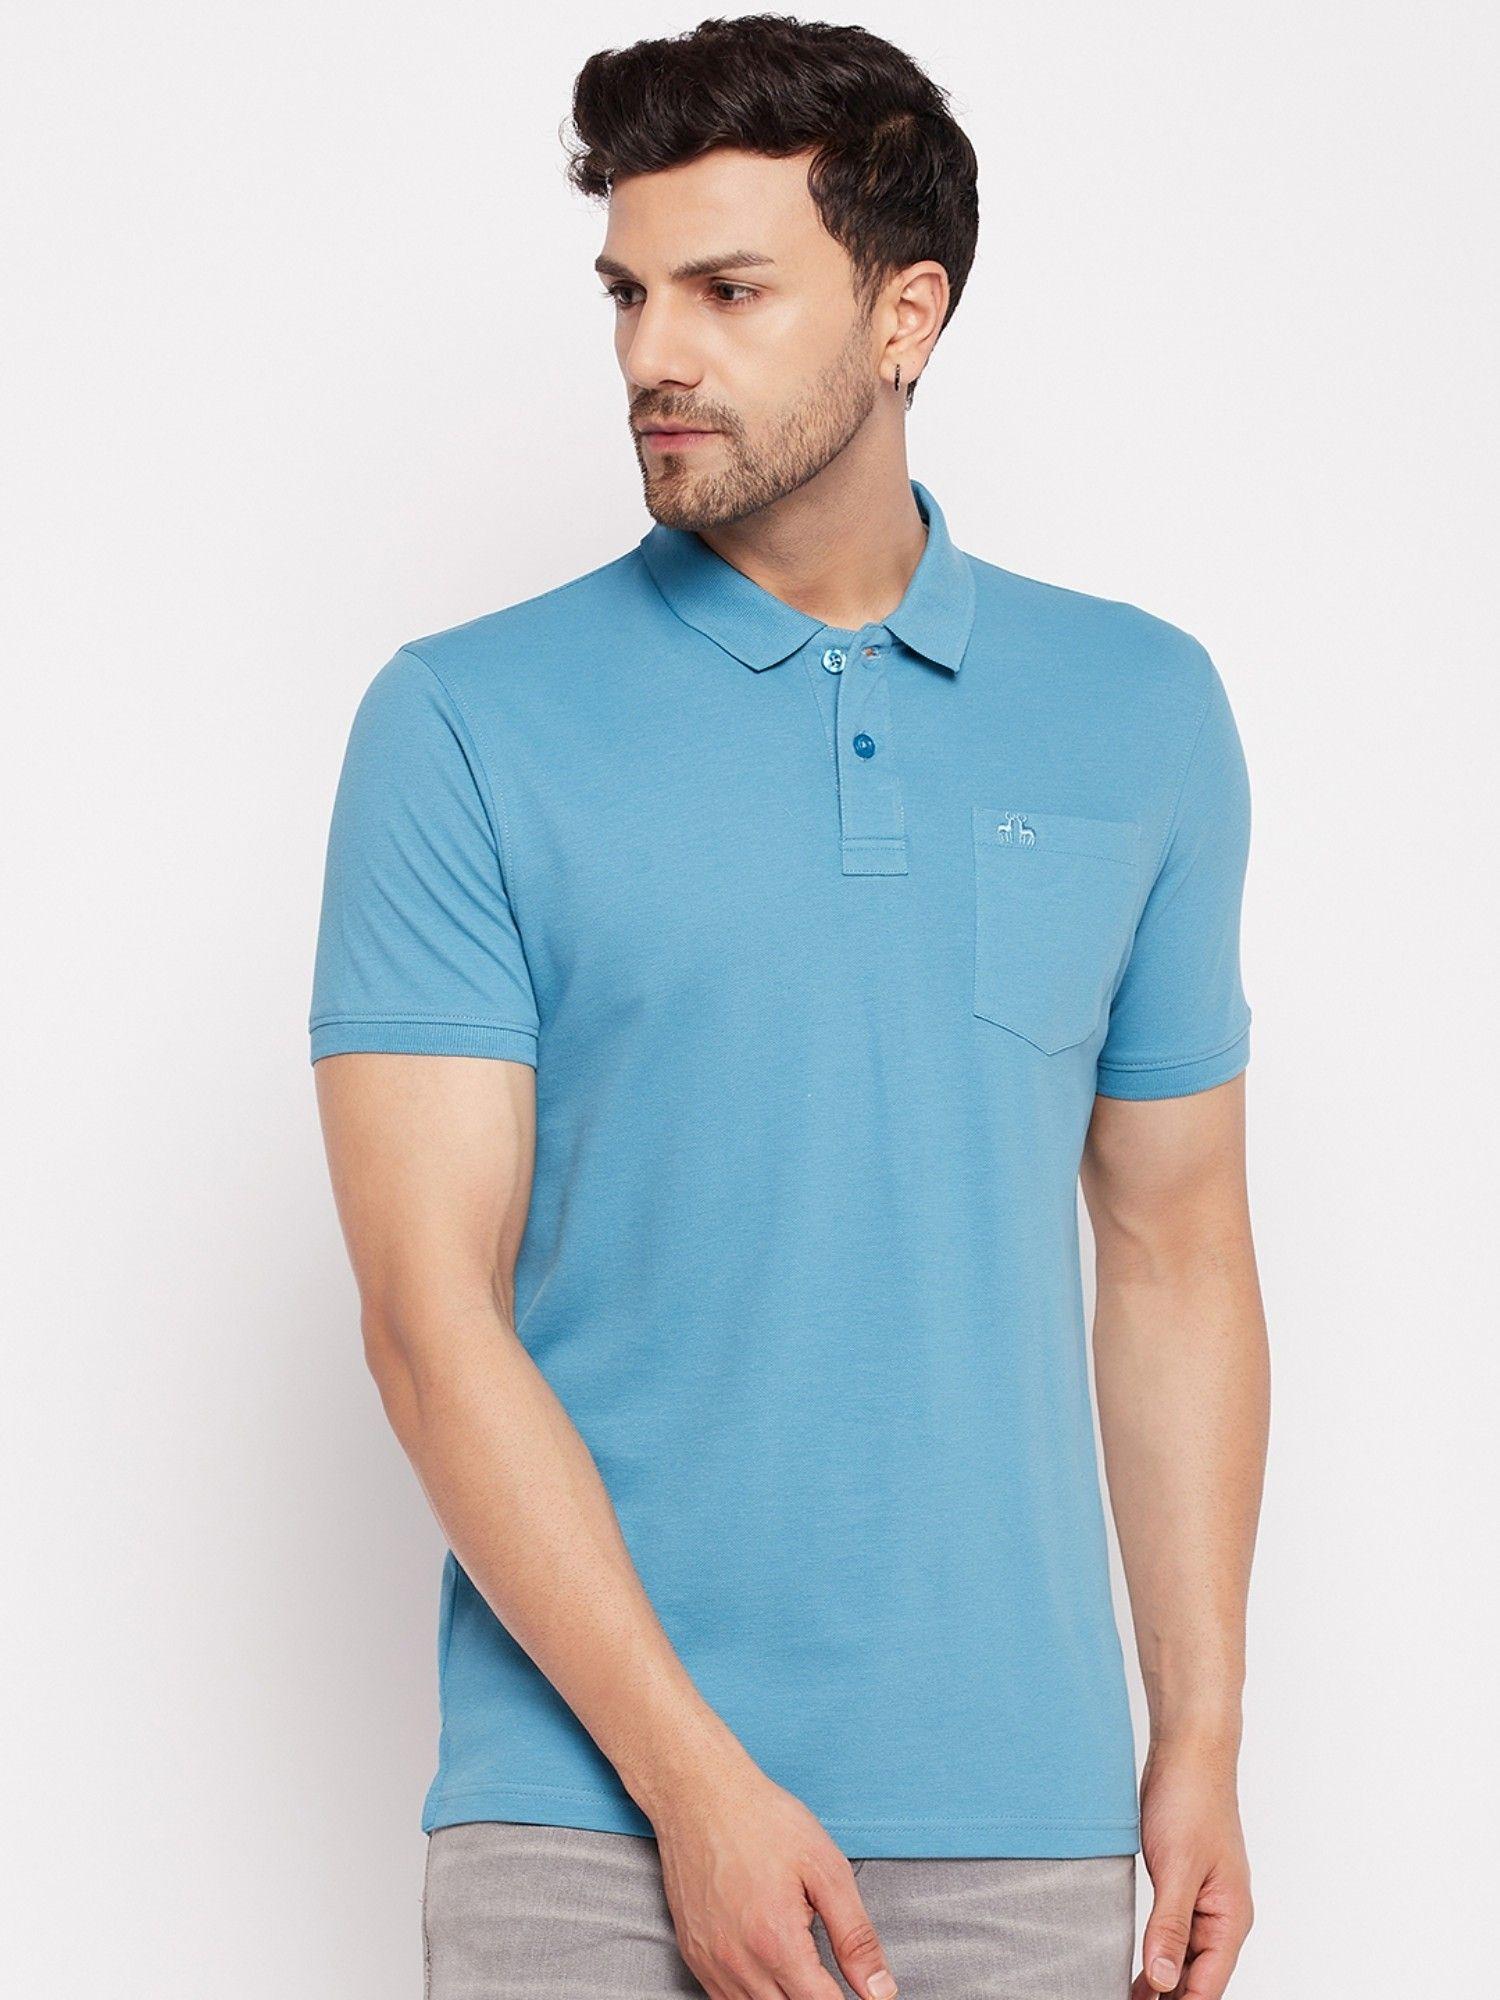 mens cotton lycra blue polo neck t-shirt